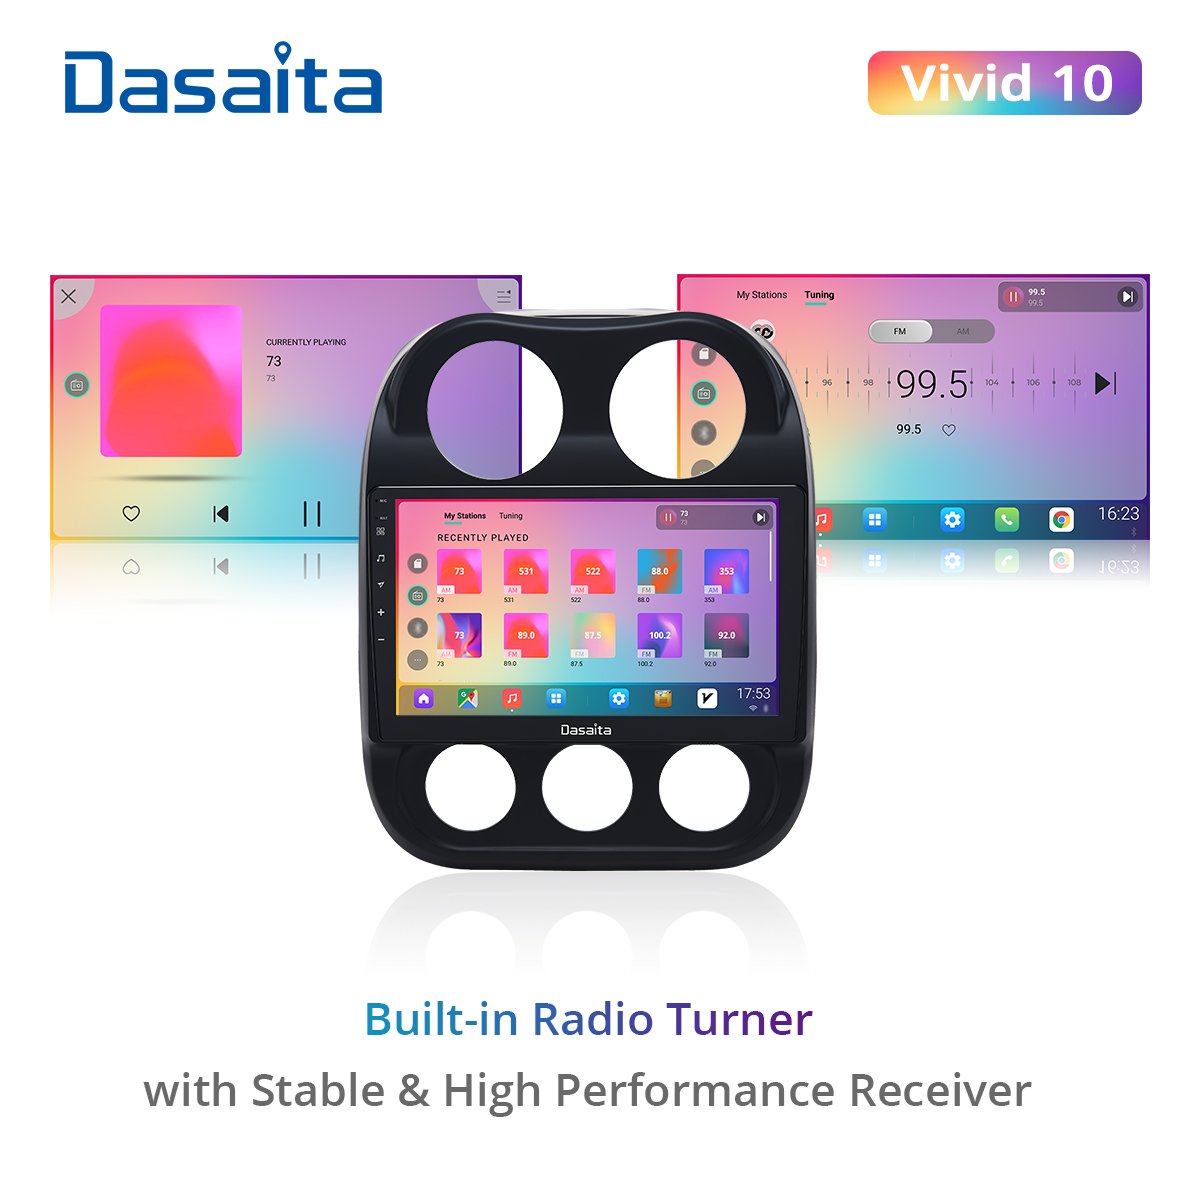 Dasaita Vivid For Jeep Compass 2017 2018 2019 Car Radio Multimedia android Car audio Apple Carplay Android Auto GPS DPS 1280*720